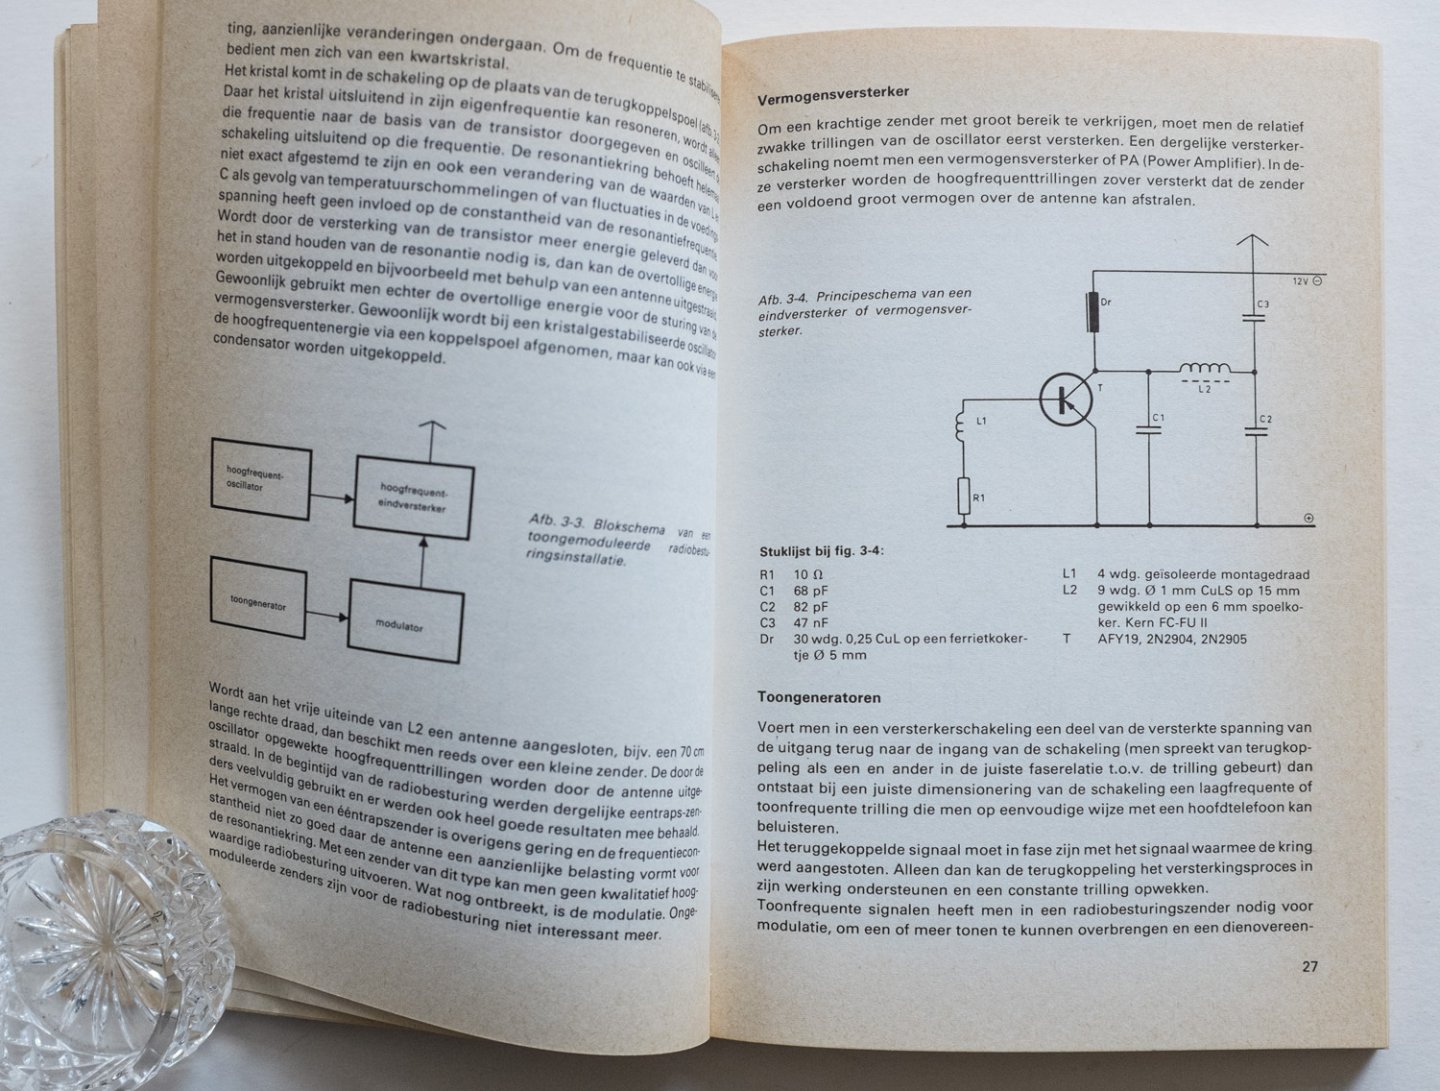 Rabe, Erich - Hobbyboek modelbesturing : praktische gegevens voor radiobesturing van vliegtuig-, scheeps- en automodellen